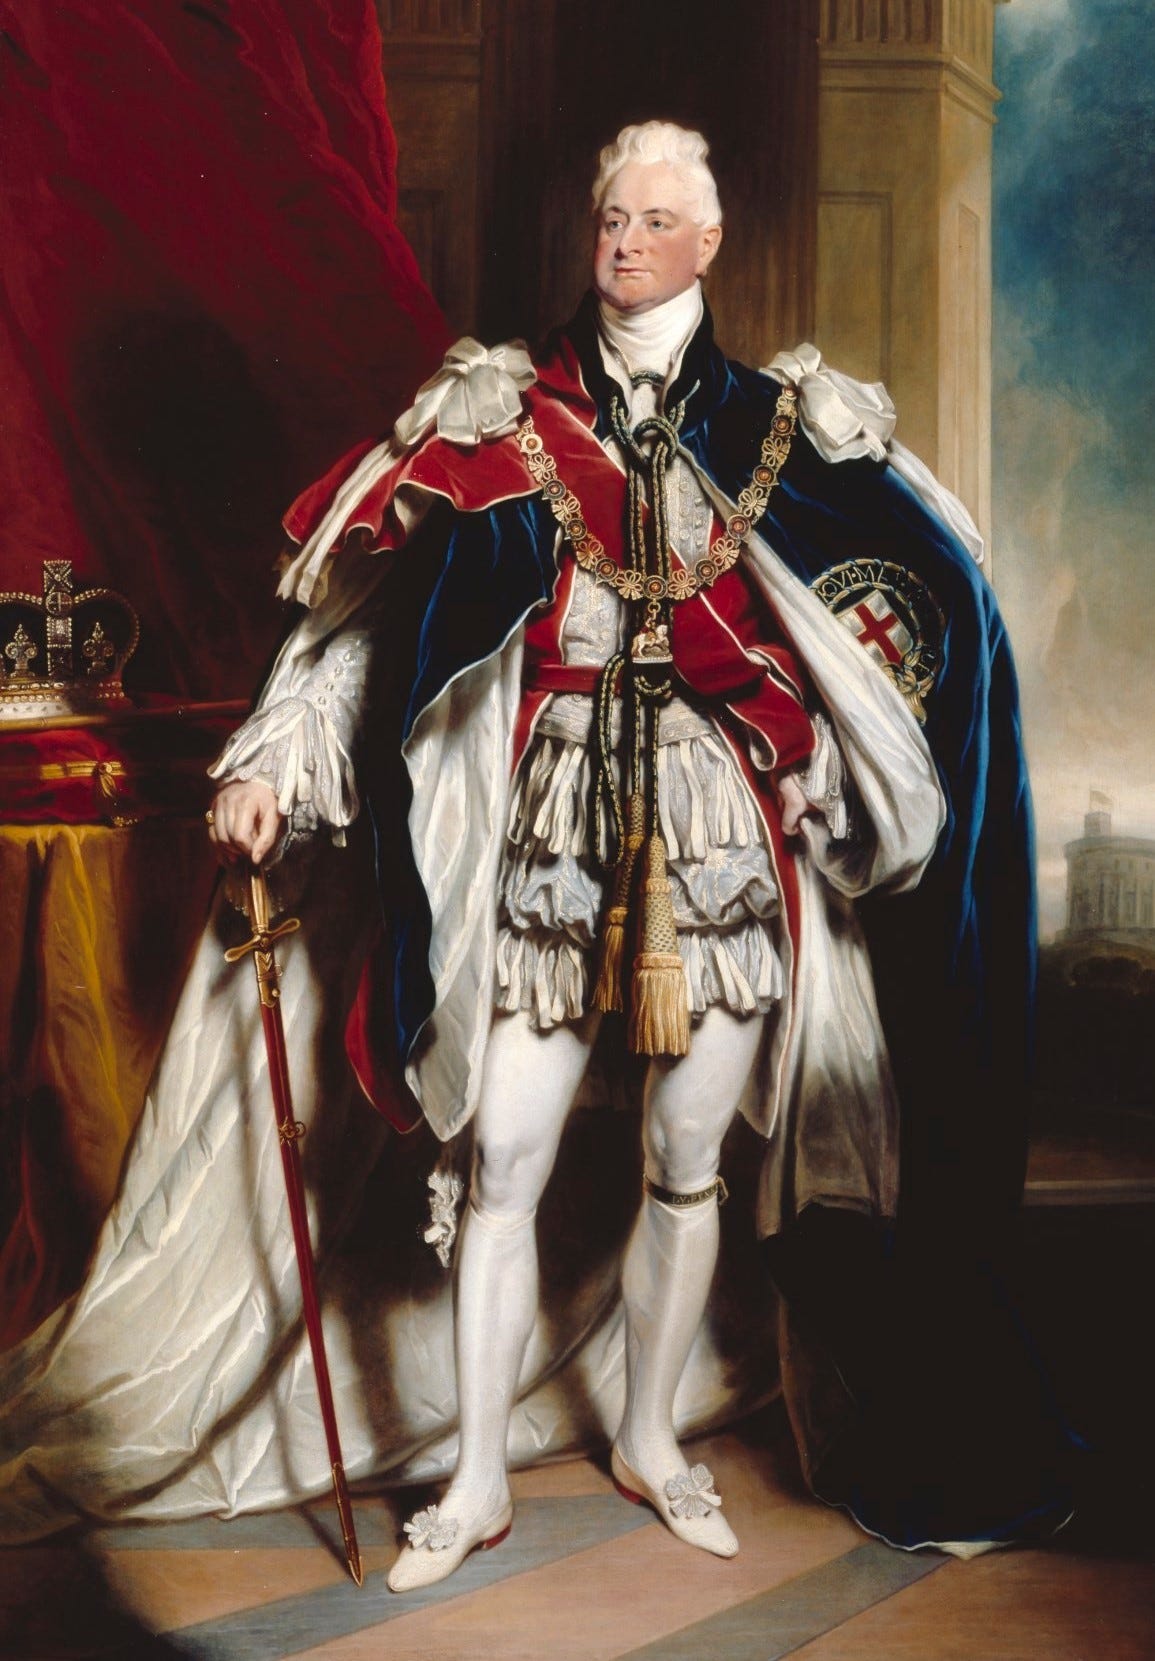 William IV - Wikipedia